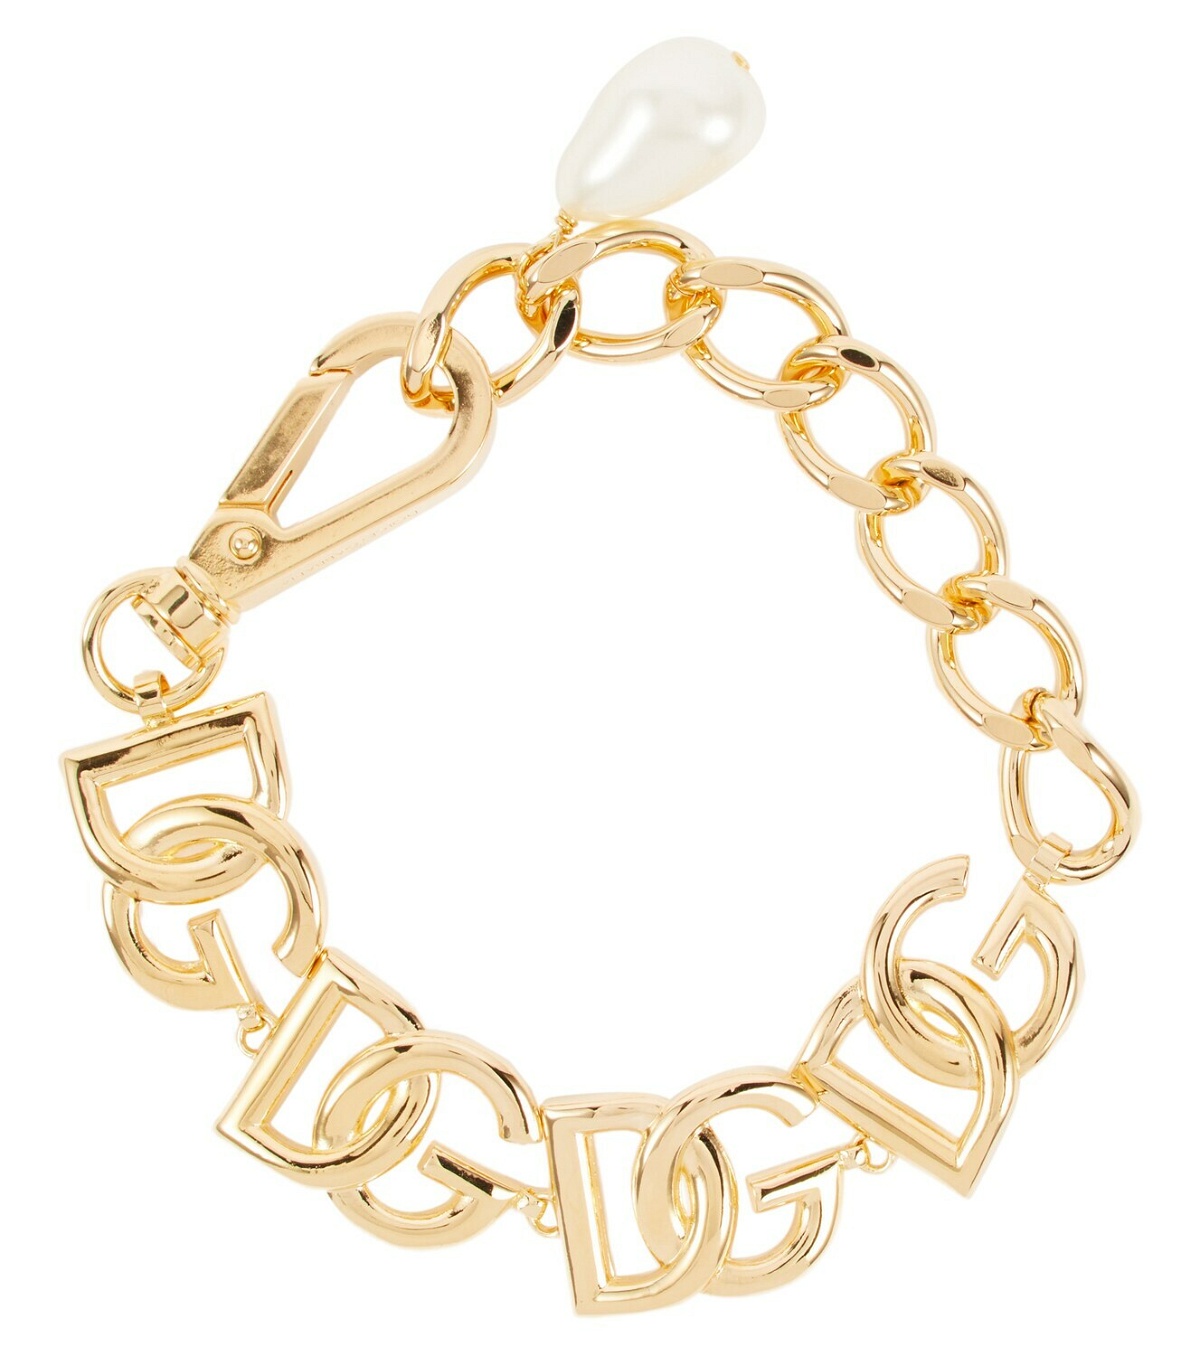 Dolce&Gabbana - DG gold-plated brass bracelet Dolce & Gabbana